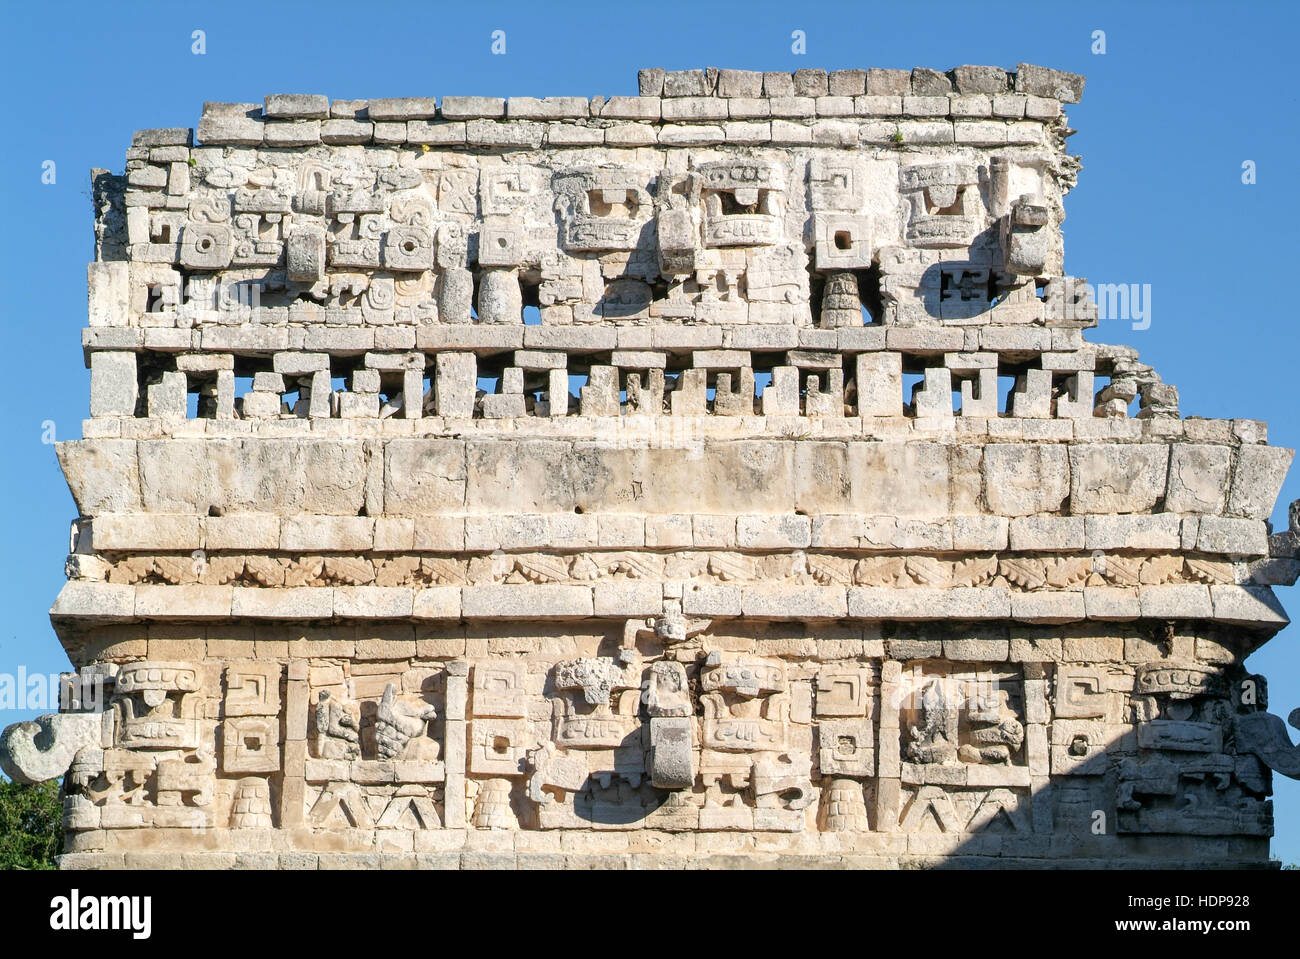 Building called Nunnery (Edificio de las Monjas) in the ancient Mayan city Chichen Itza, Mexico Stock Photo